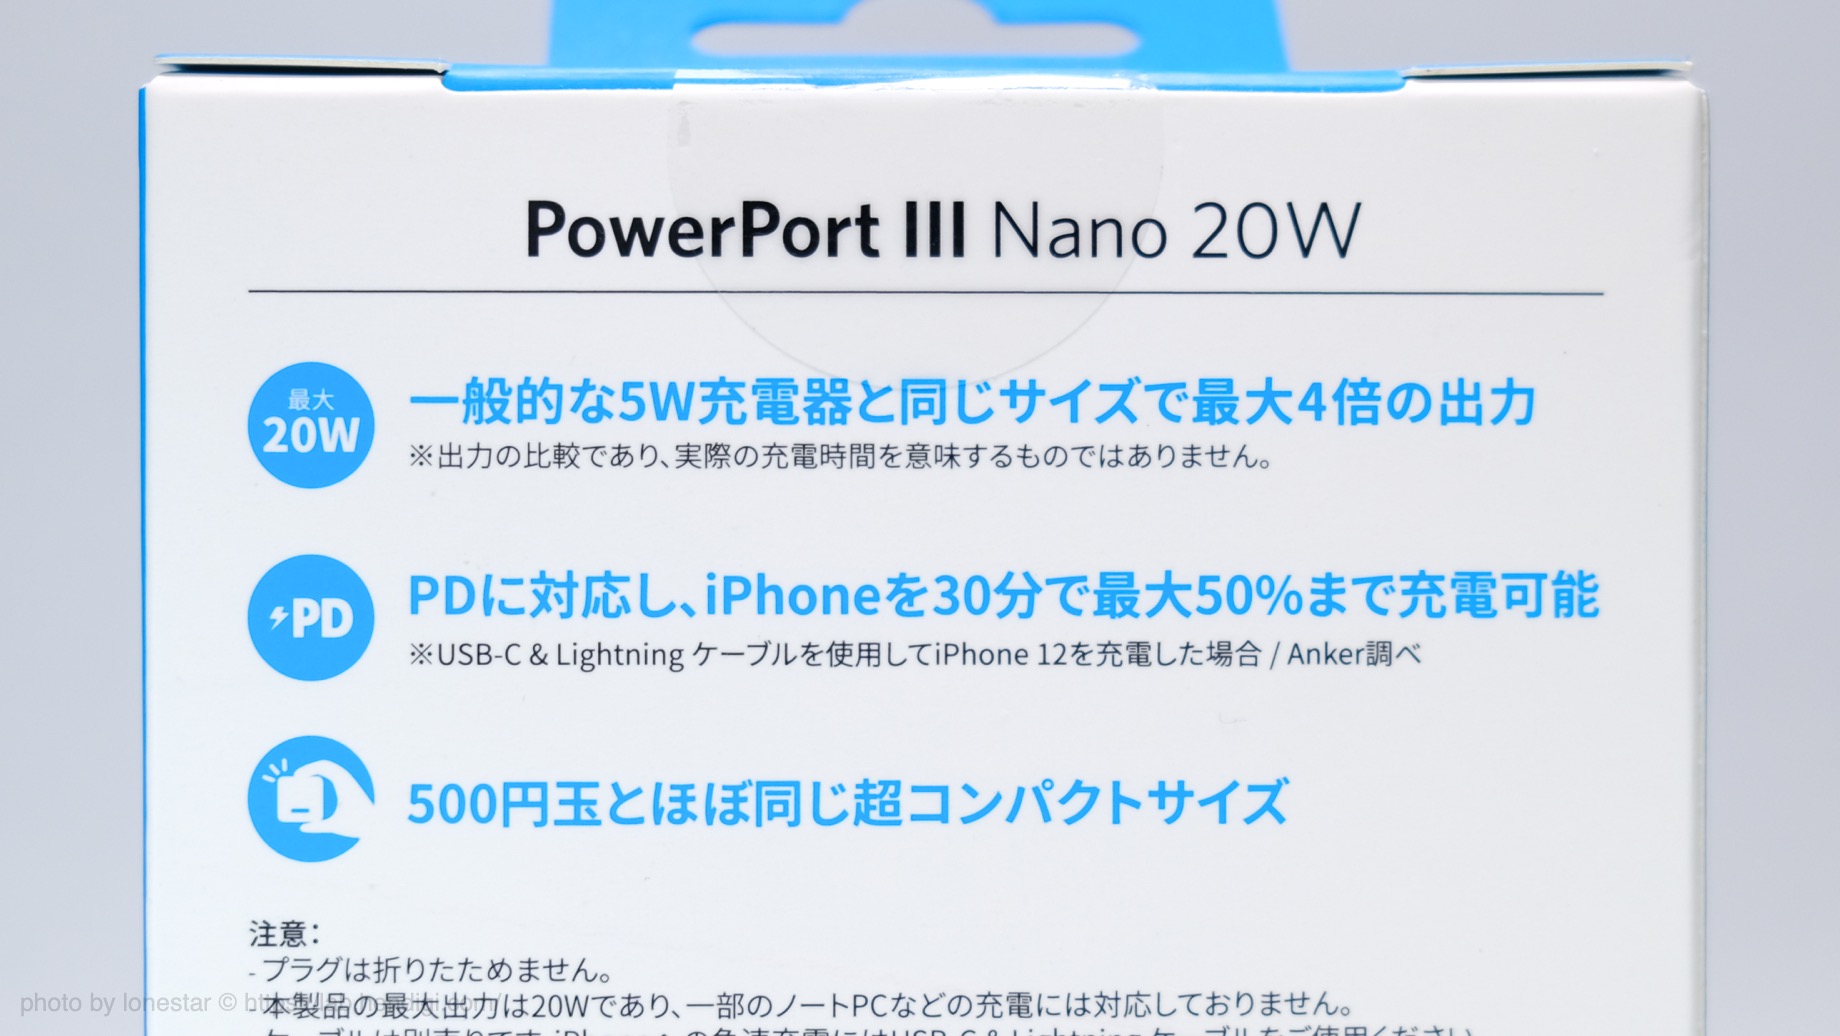 PowerPort III Nano 20W